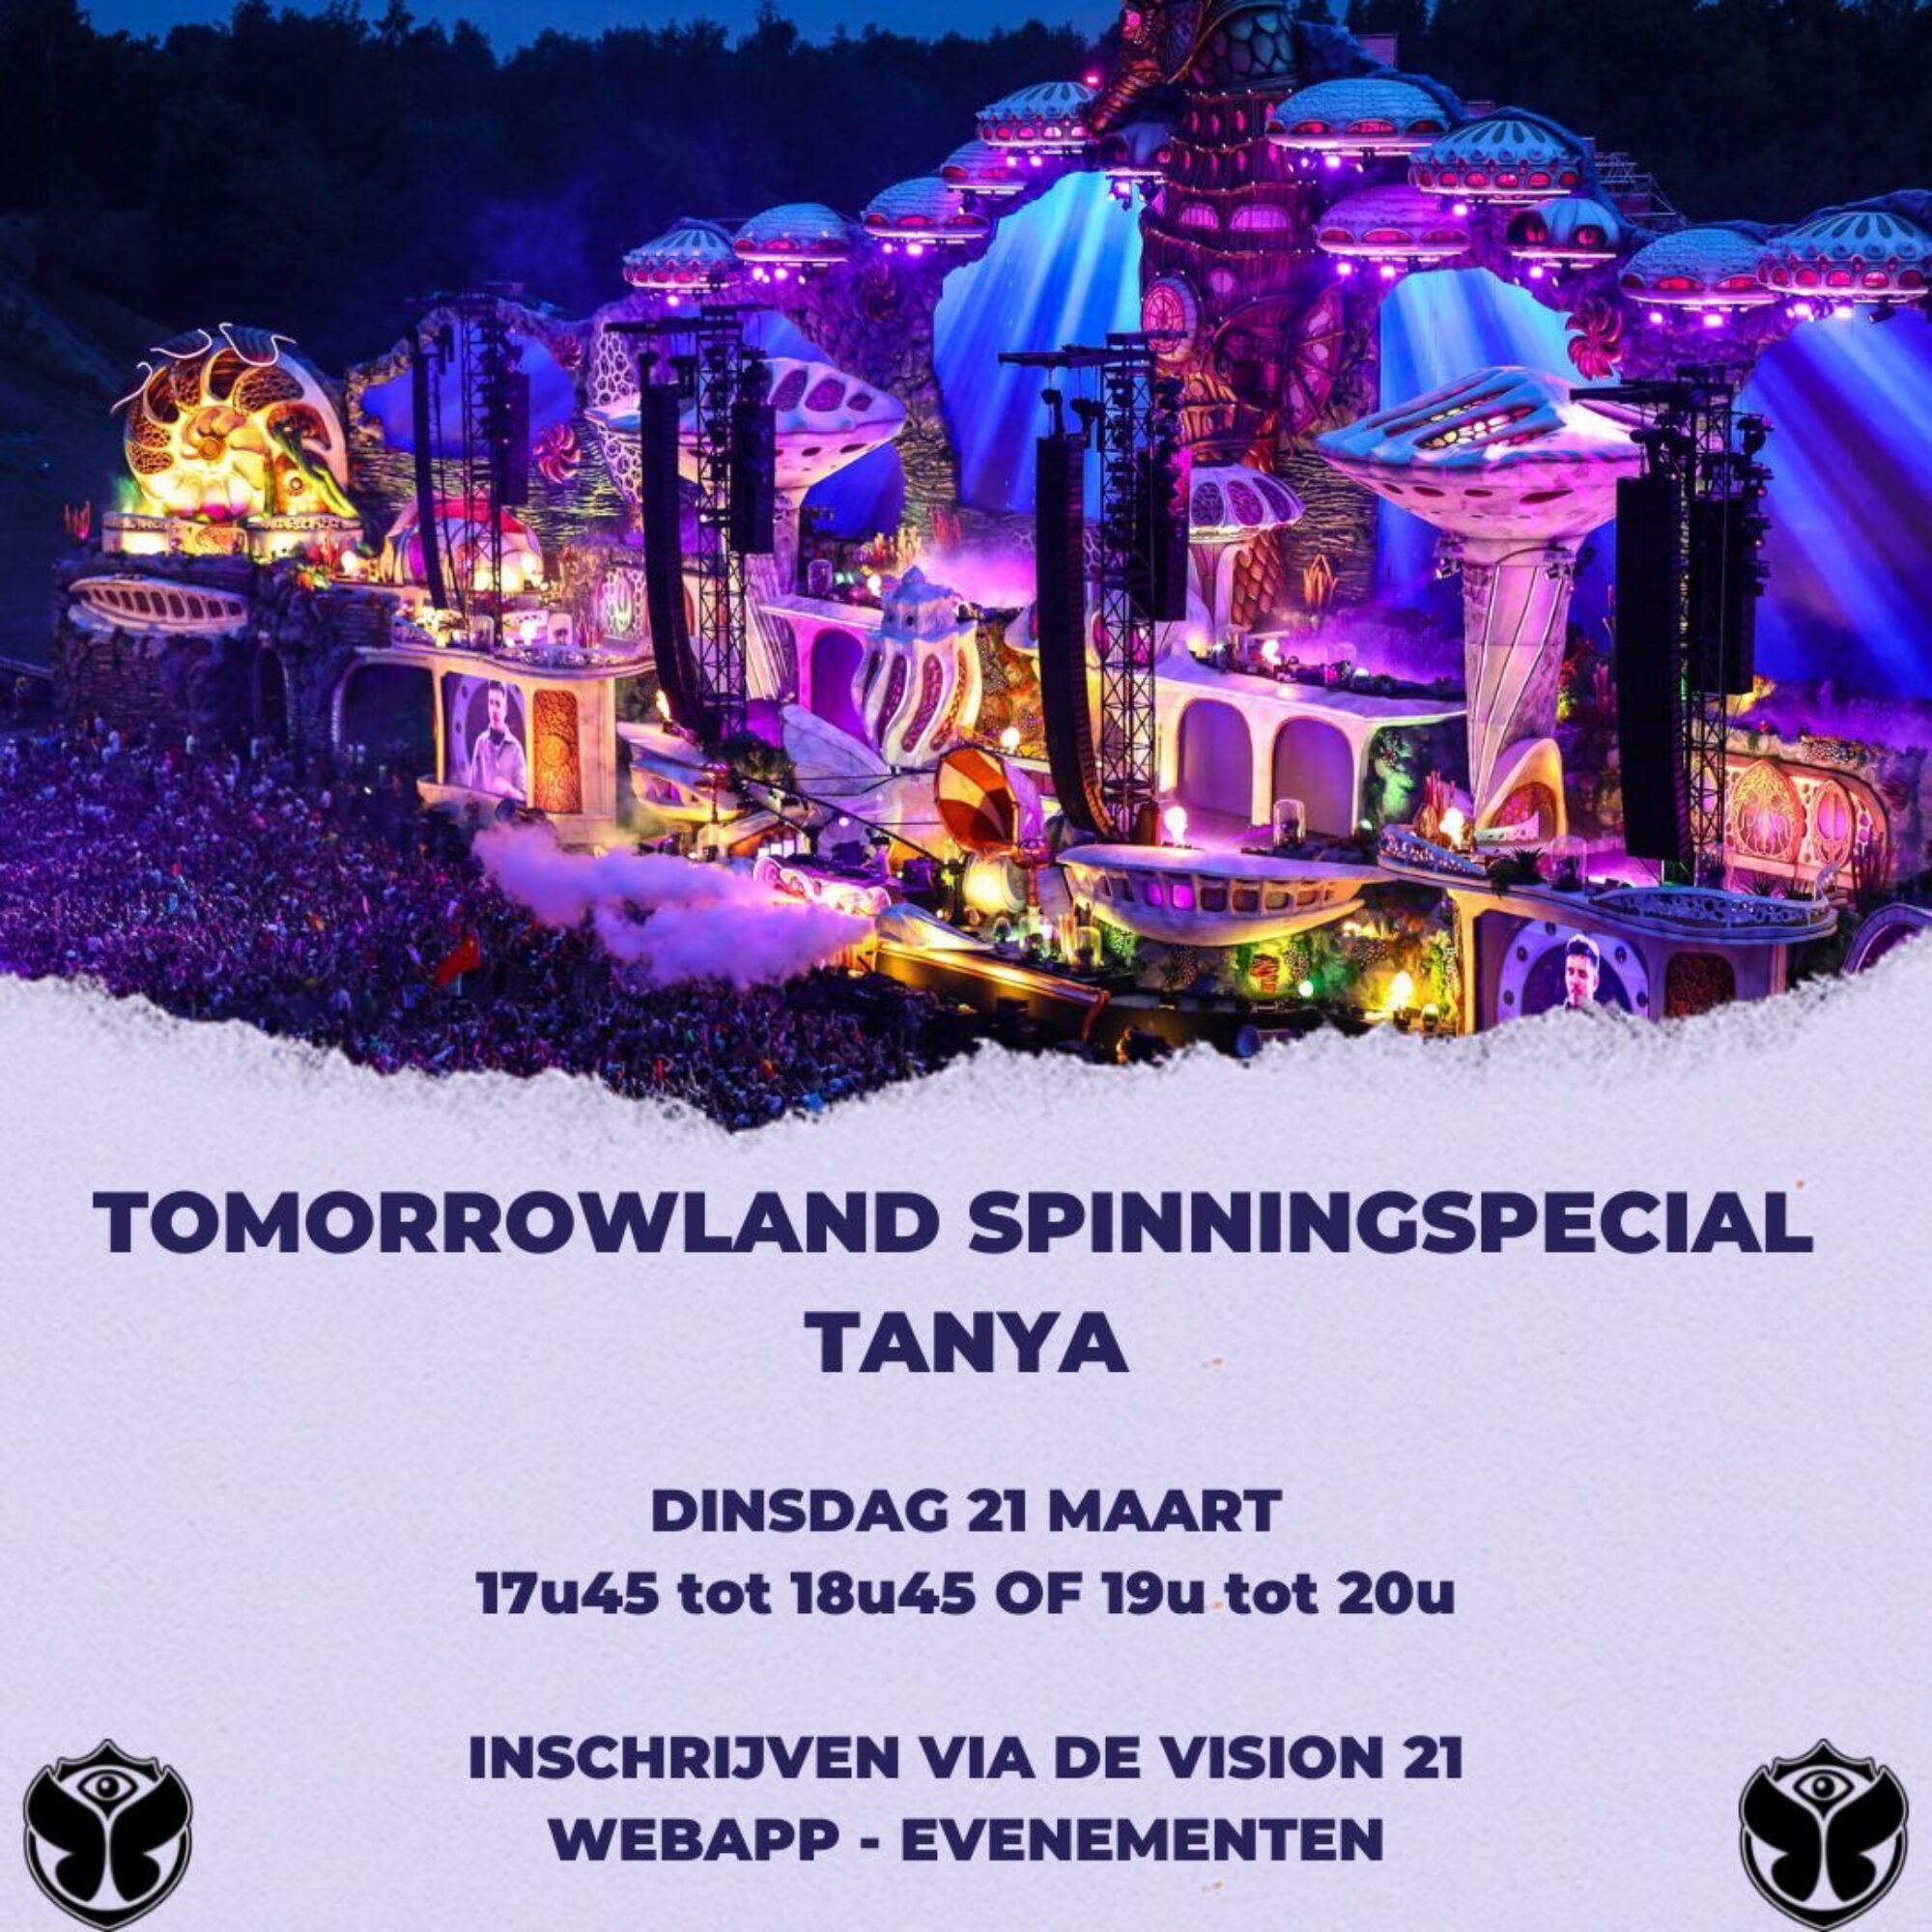 Tomorrowland spinningspecial tanya